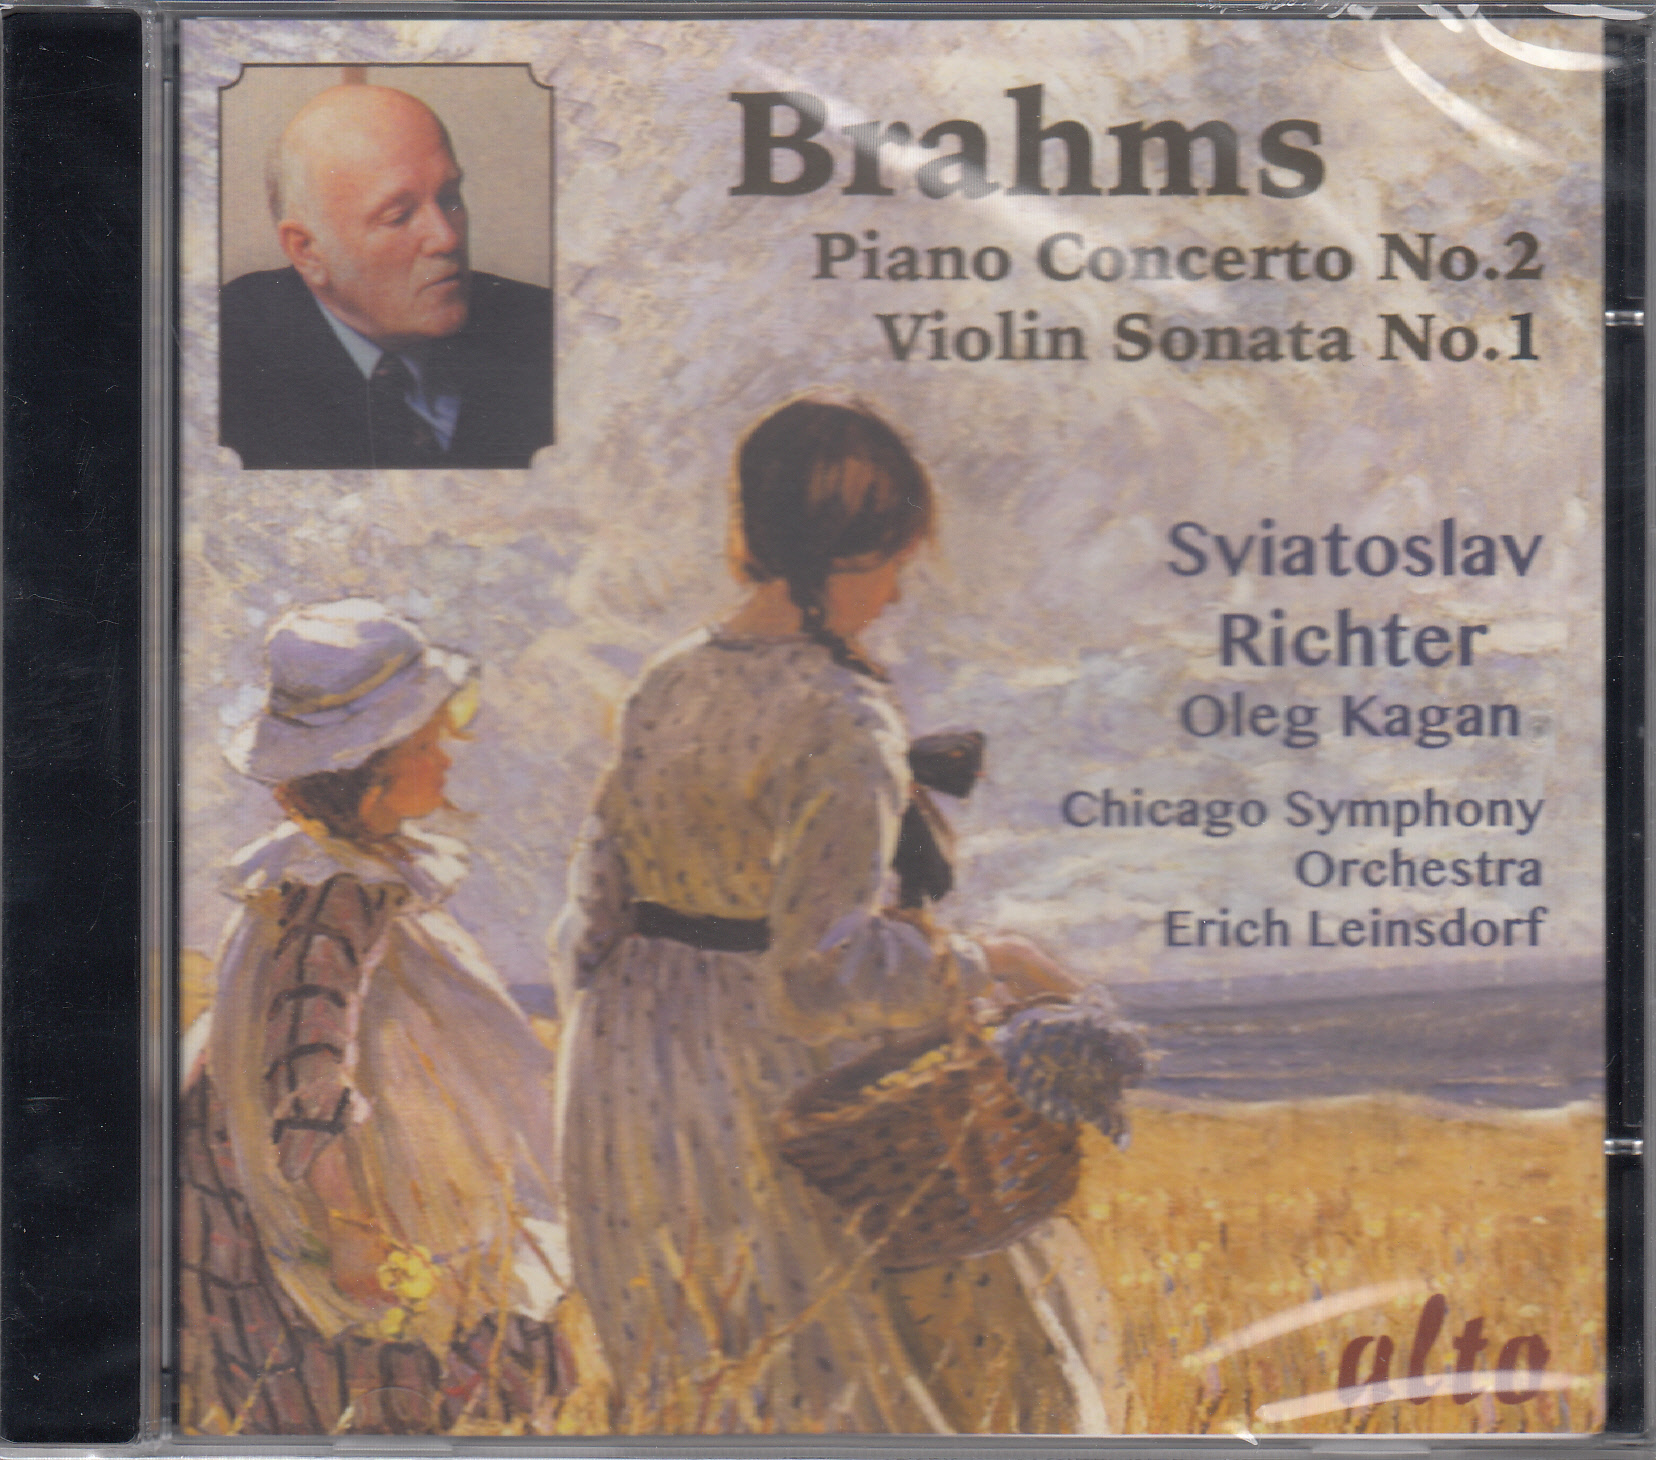 BRAHMS... - PIOANO CONCERTO NO.2 - VIOLIN SONATA NO.1 CD SVIATOSLAV RICHTER, OLEG KAGAN